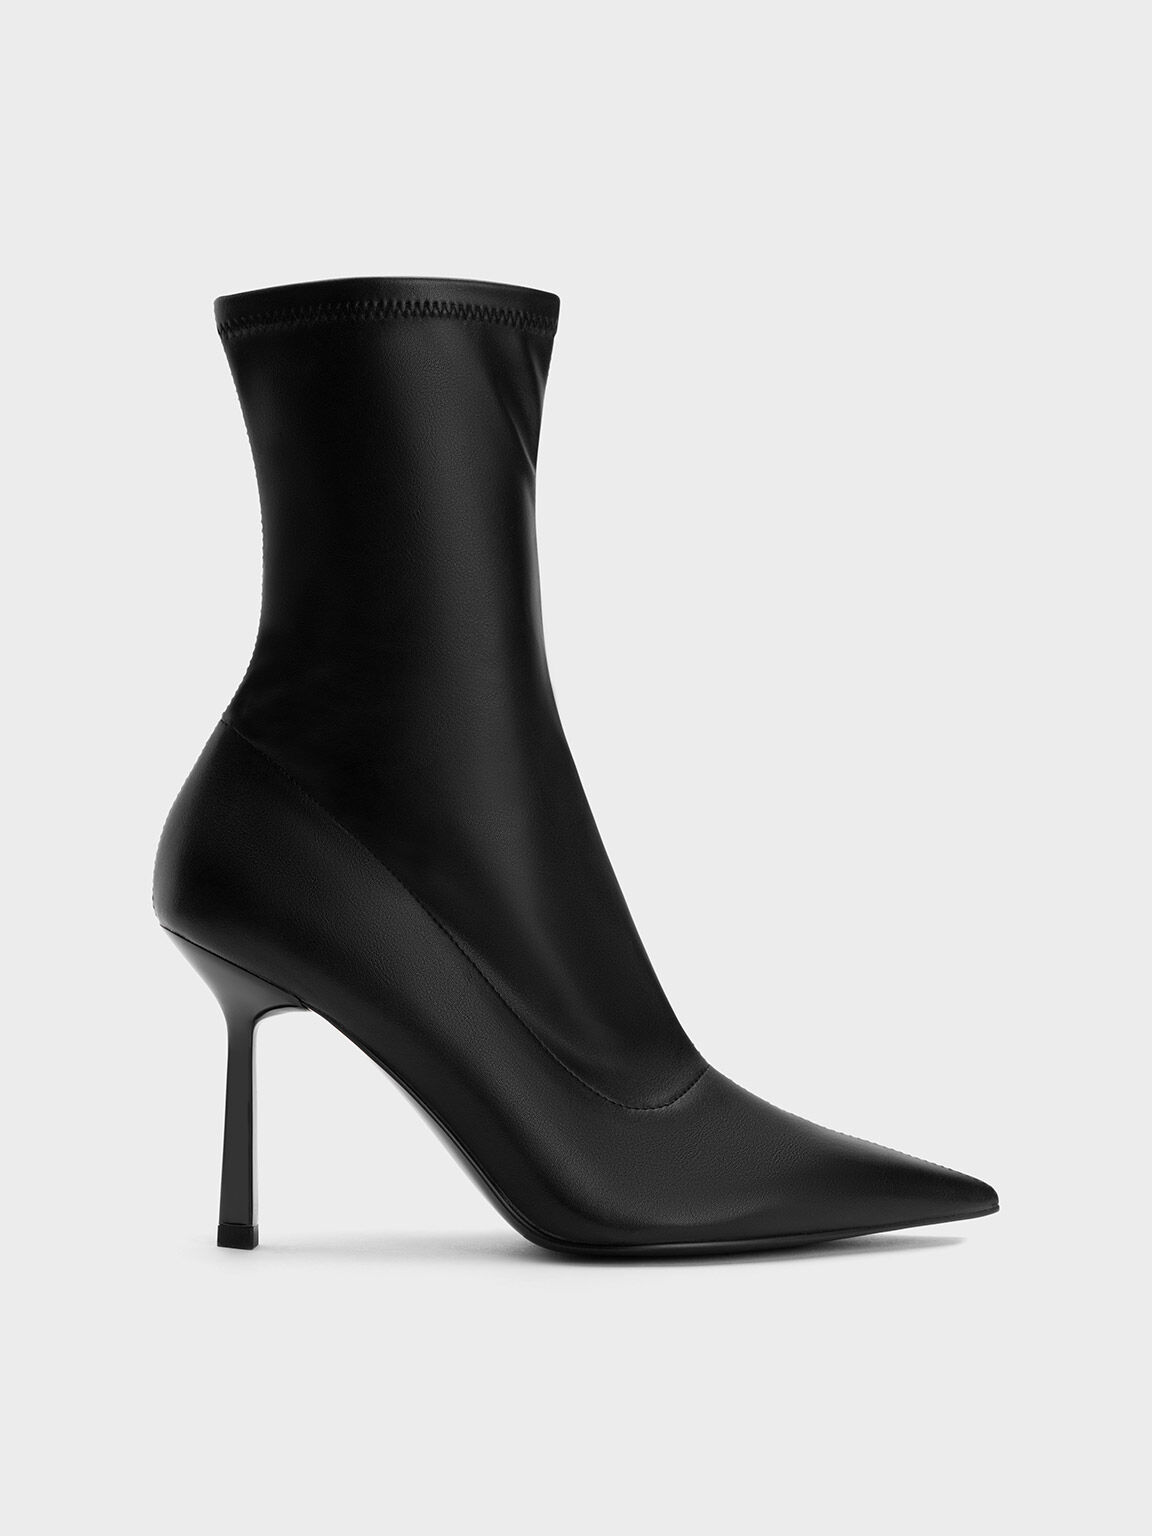 10 Ways Women Must Wear High Heel Boots To Get A Sleek Look - Theunstitchd  Women's Fashion Blog